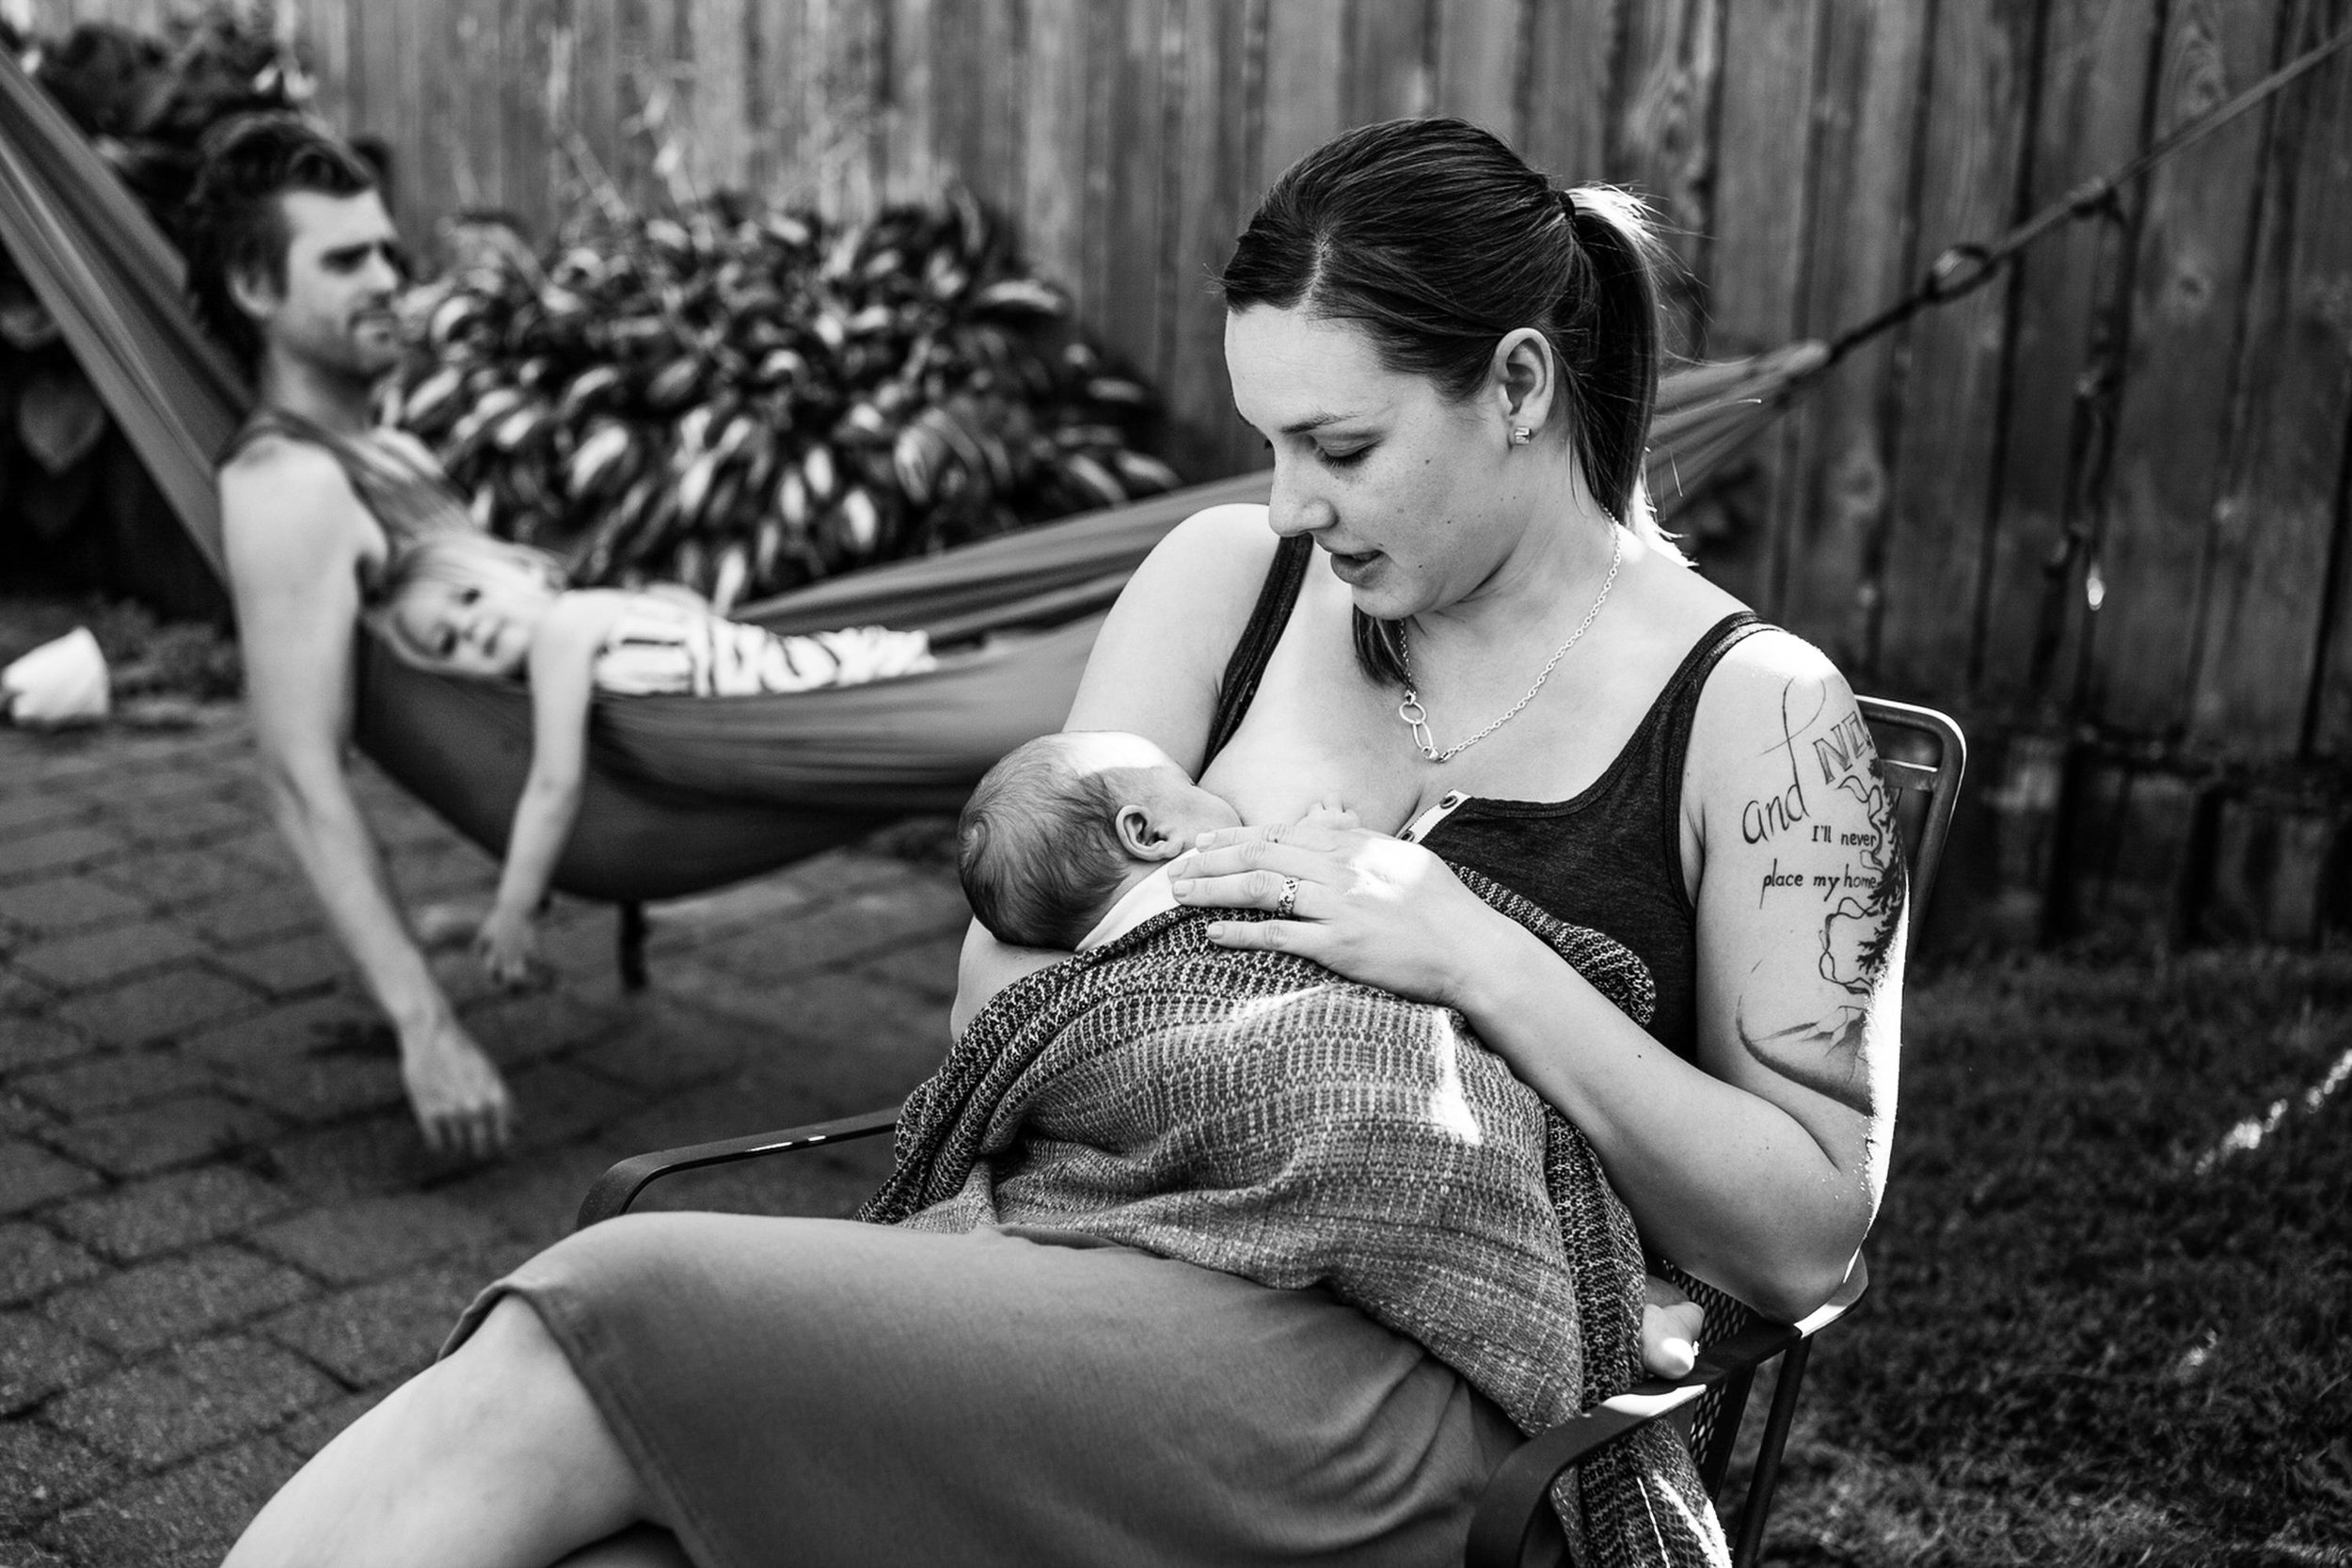 seattle newborn photographer - in home